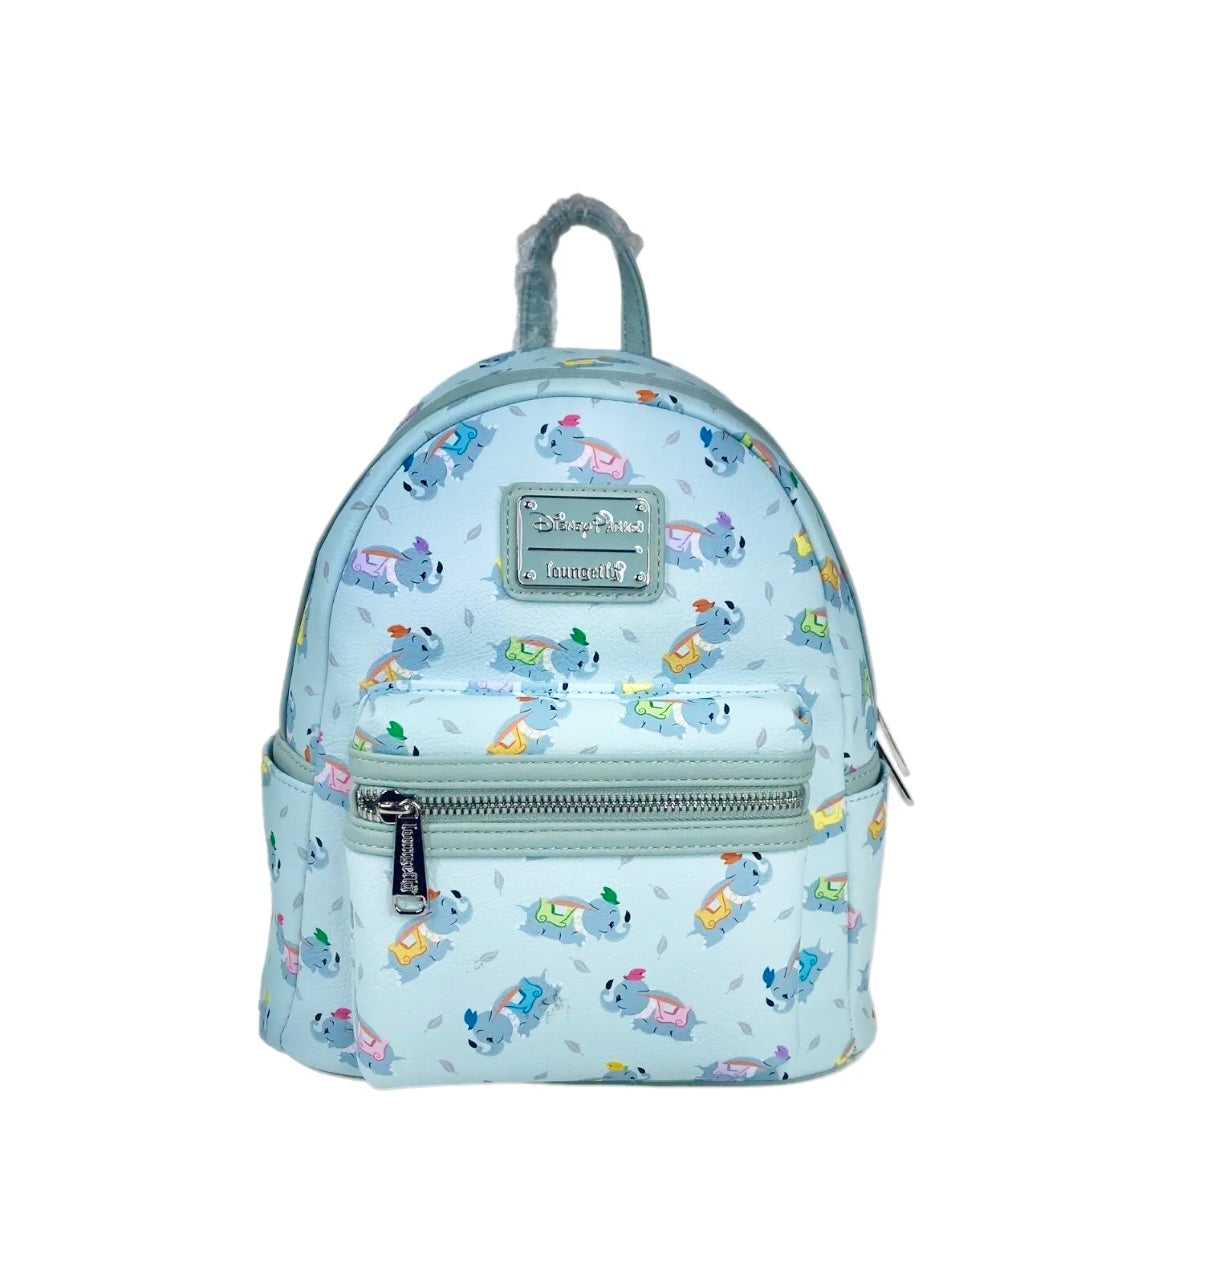 disney loungefly mini backpack